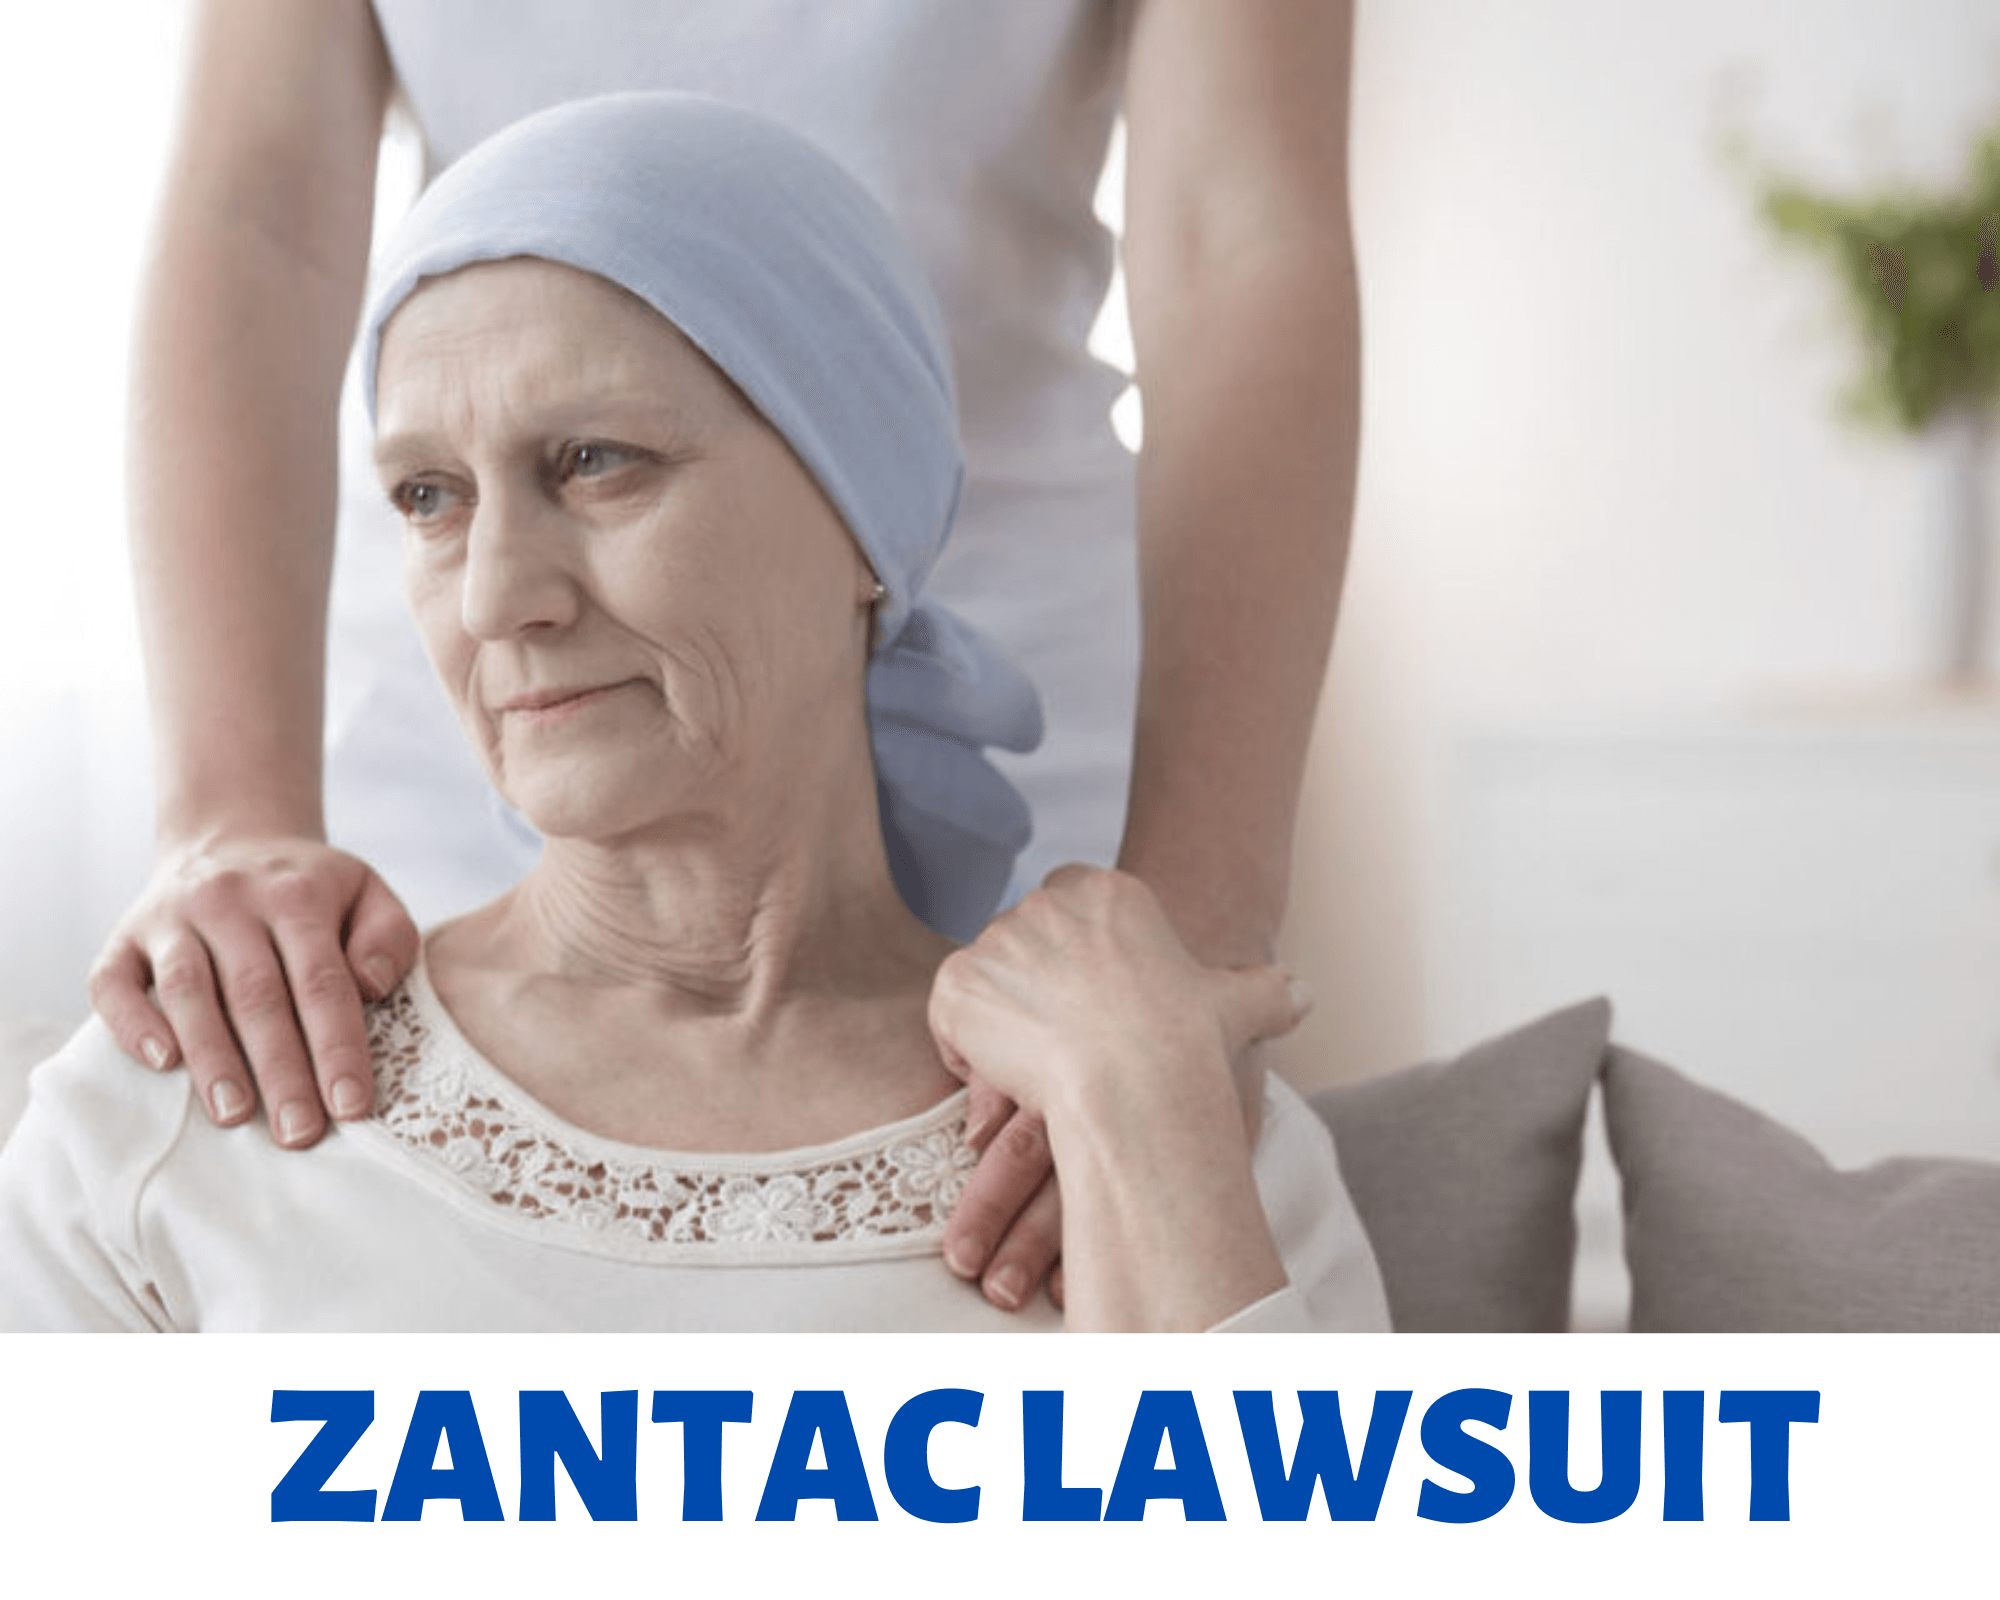 Zantac Cancer Settlement Lawyers, Zantac Lawsuit Claims